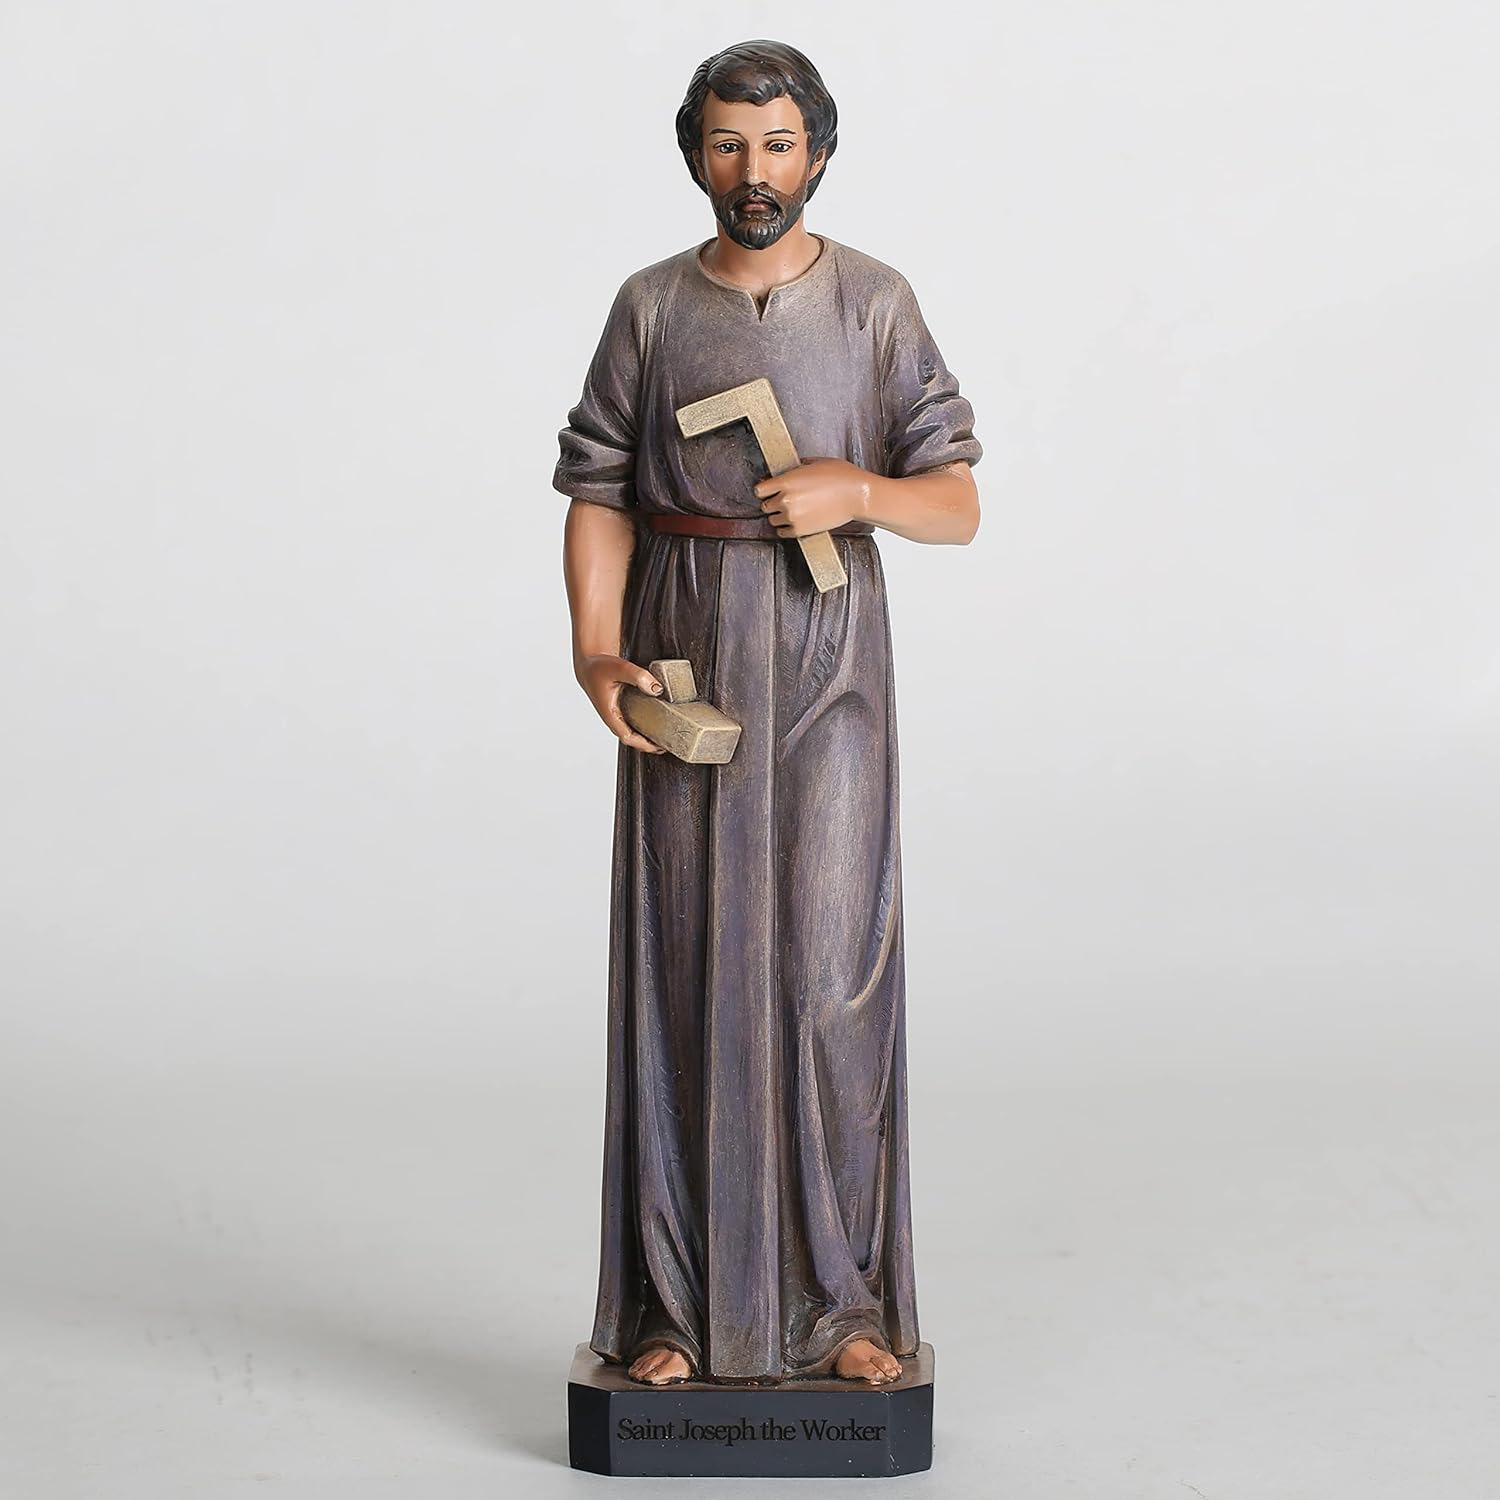 Catholic Saint Joseph Statue the Worker, Catholic Decor Indoor, Religious Gifts 